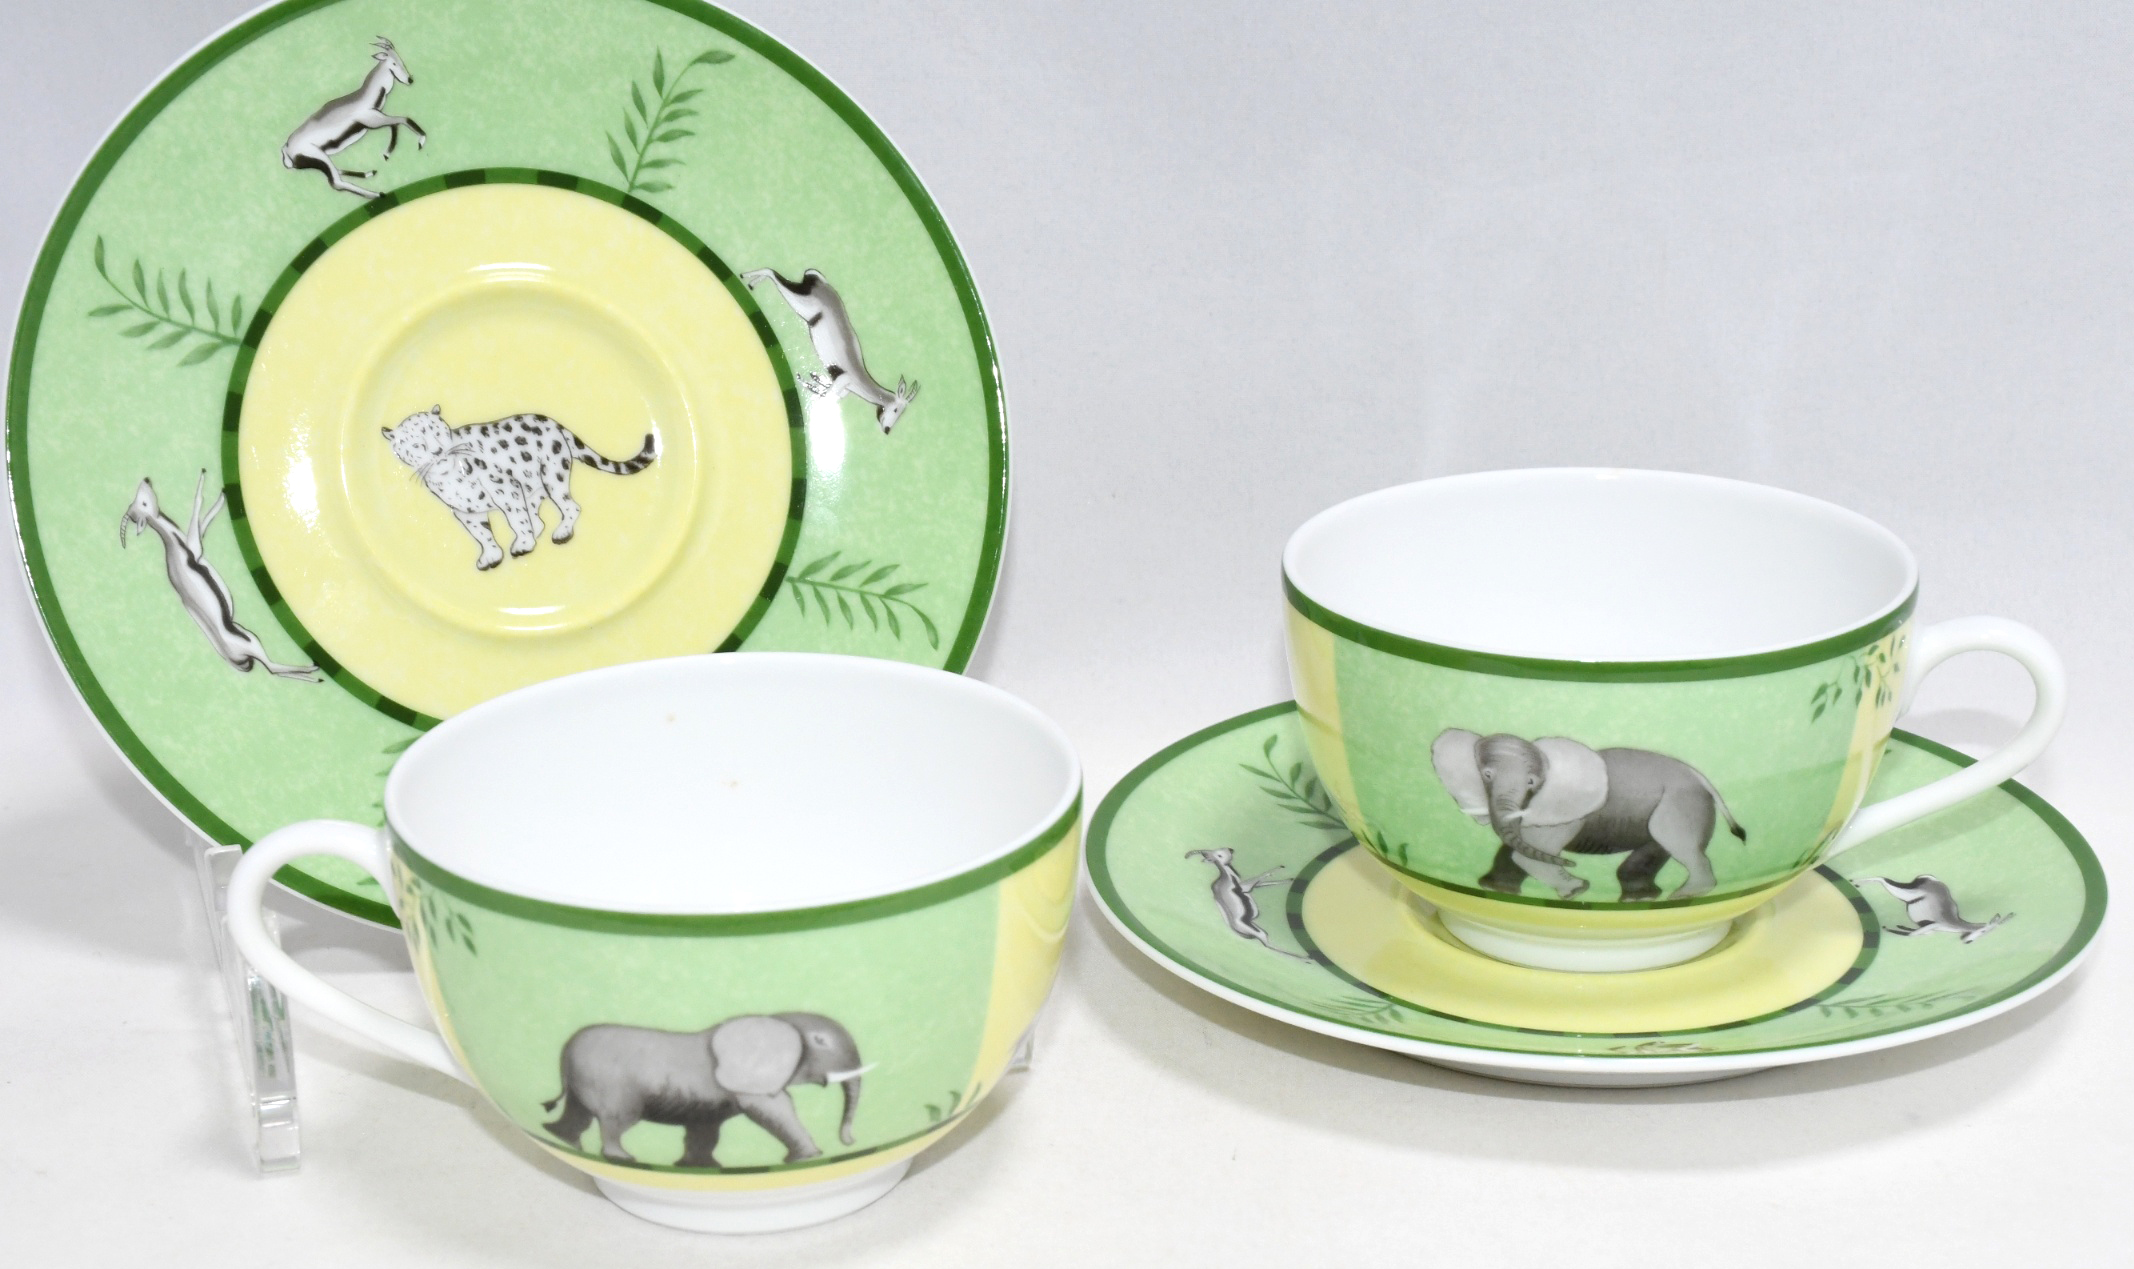 Hermes Africa Tea Cup and Saucer 2 set Green porcelain dinnerware coffee  animal – art Japan Export